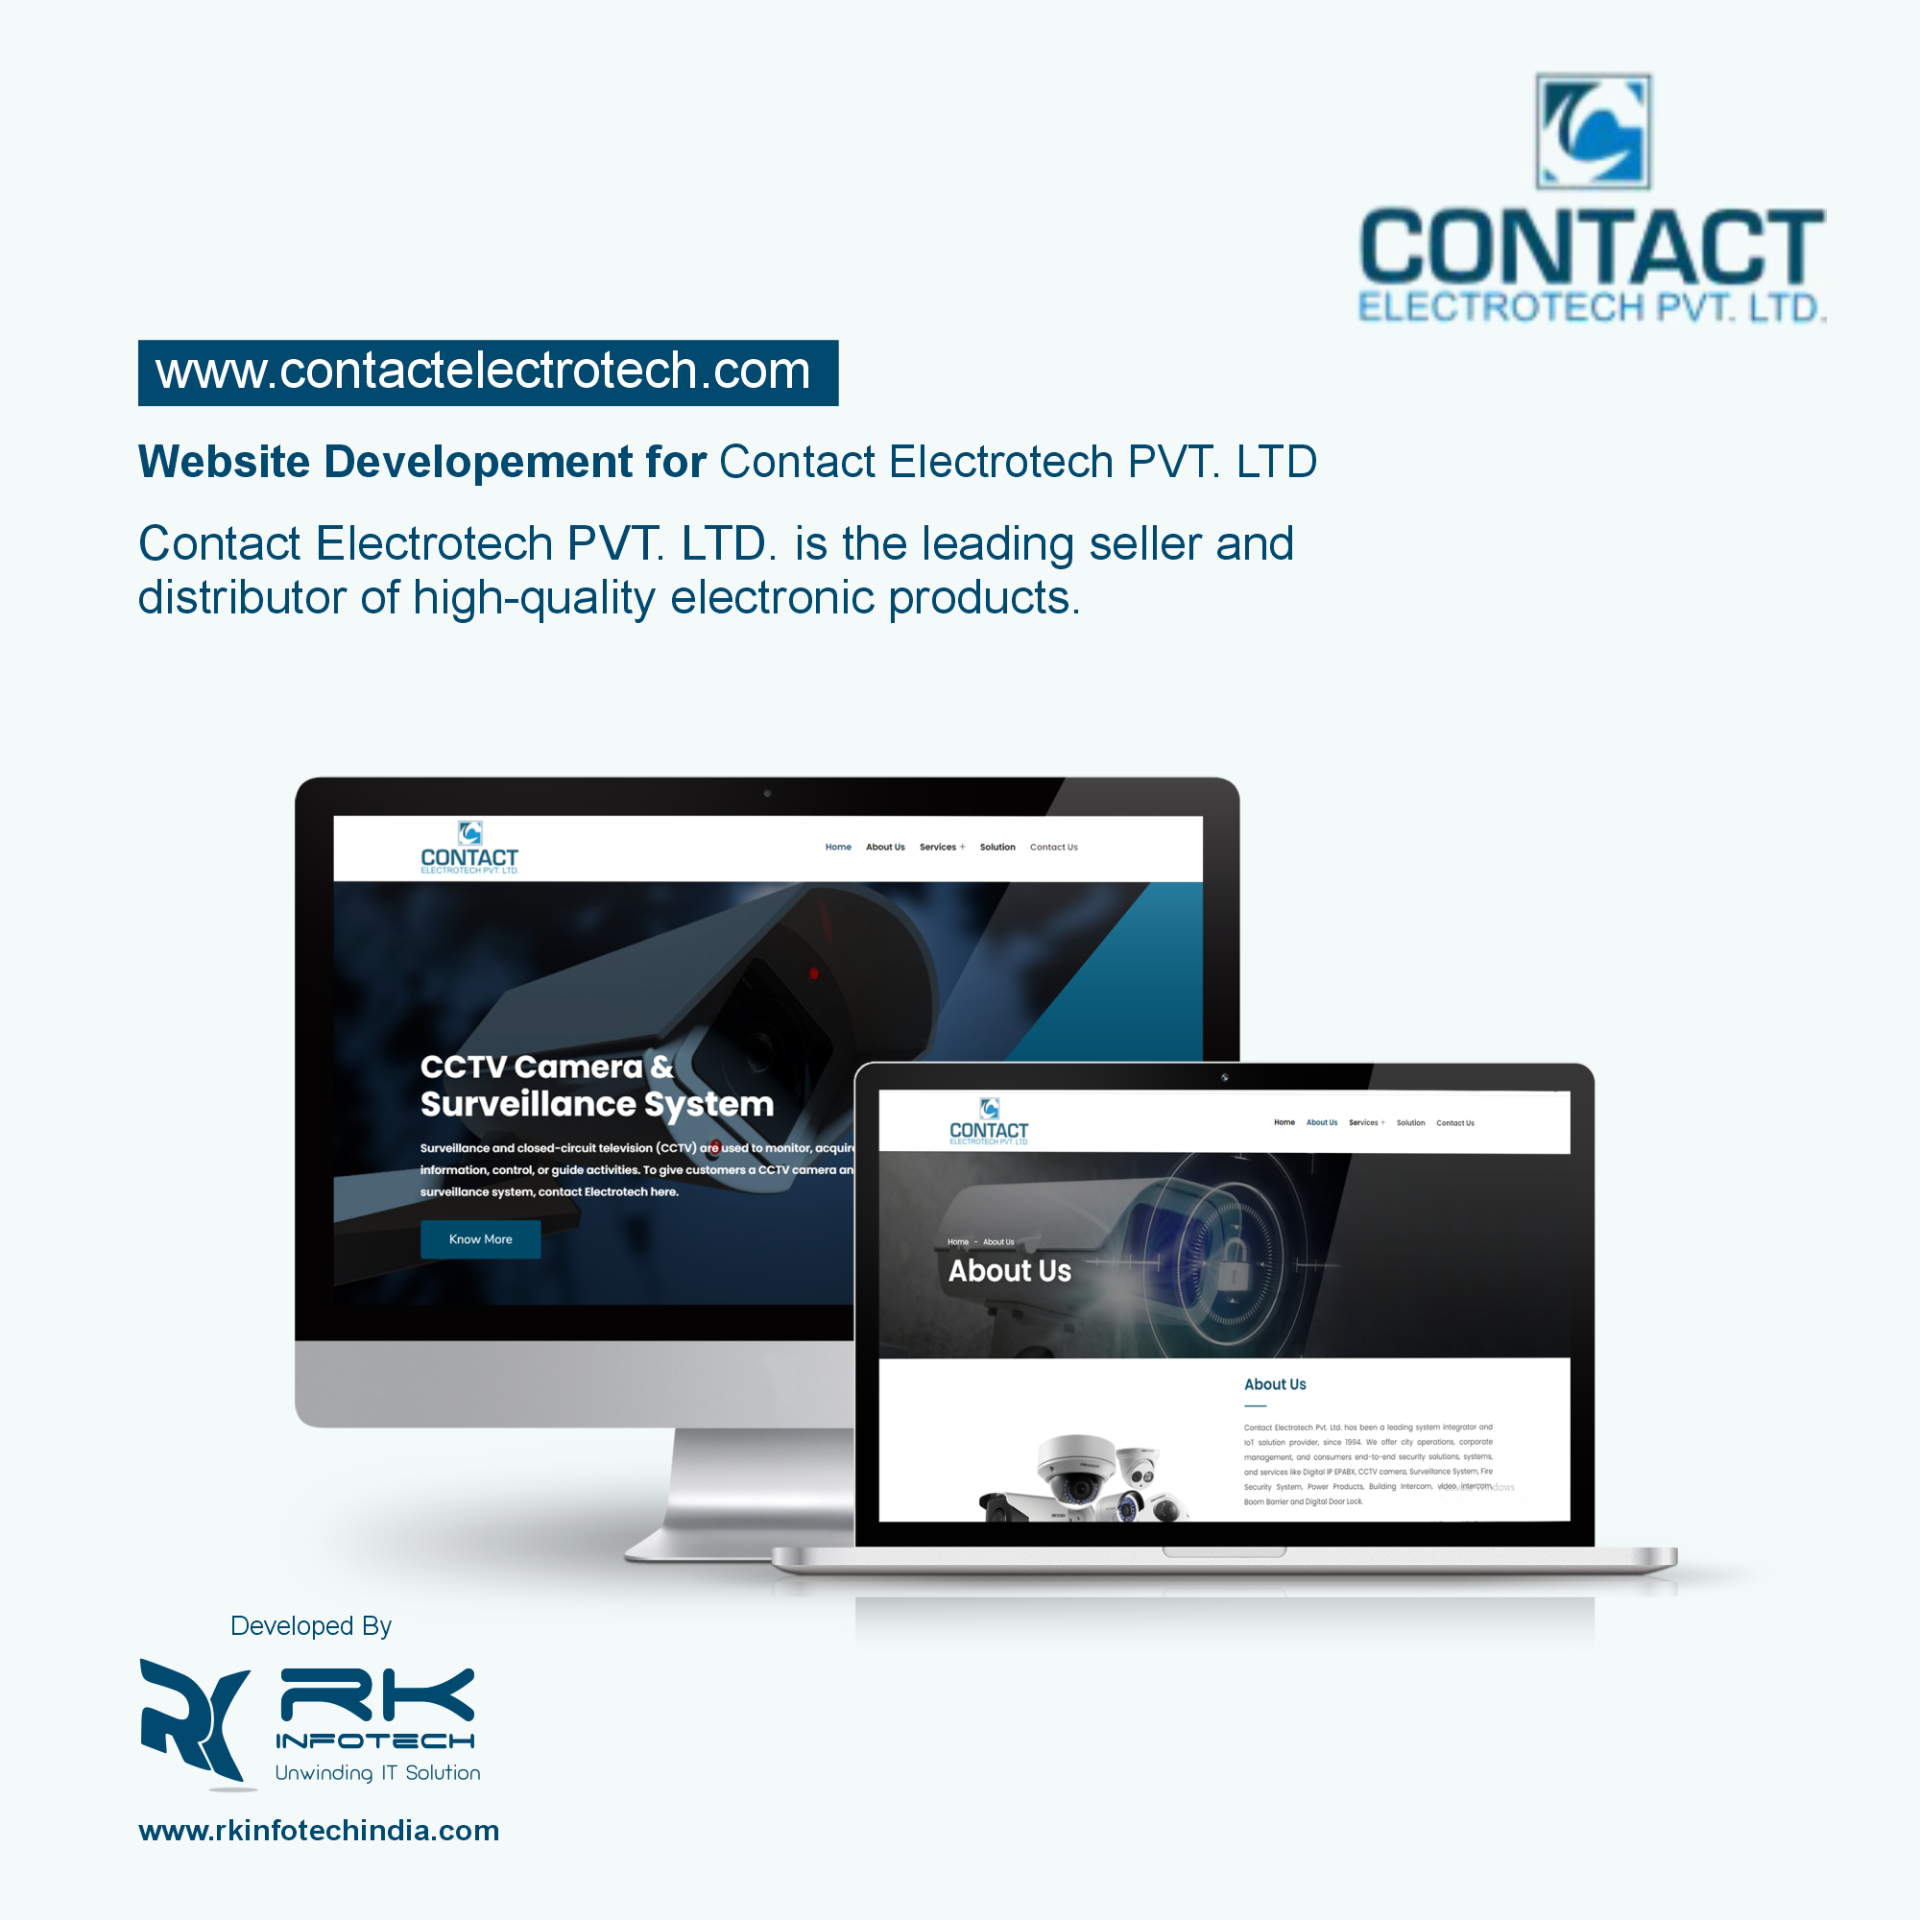 Contact Electrotech Pvt. Ltd